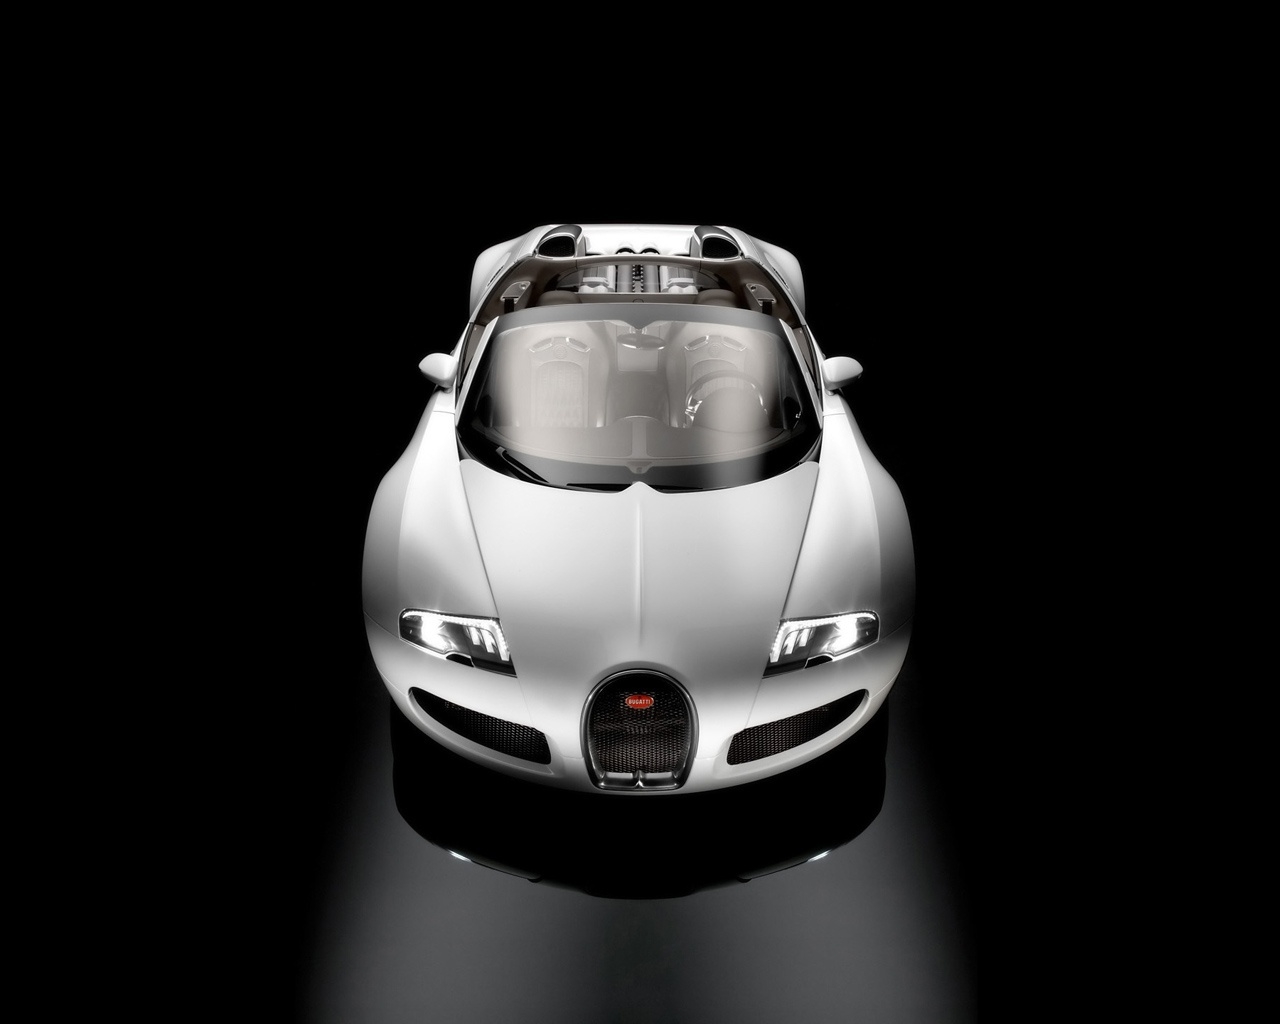 Bugatti Veyron 16.4 Grand Sport Production Version 2009 - Studio Front Top for 1280 x 1024 resolution